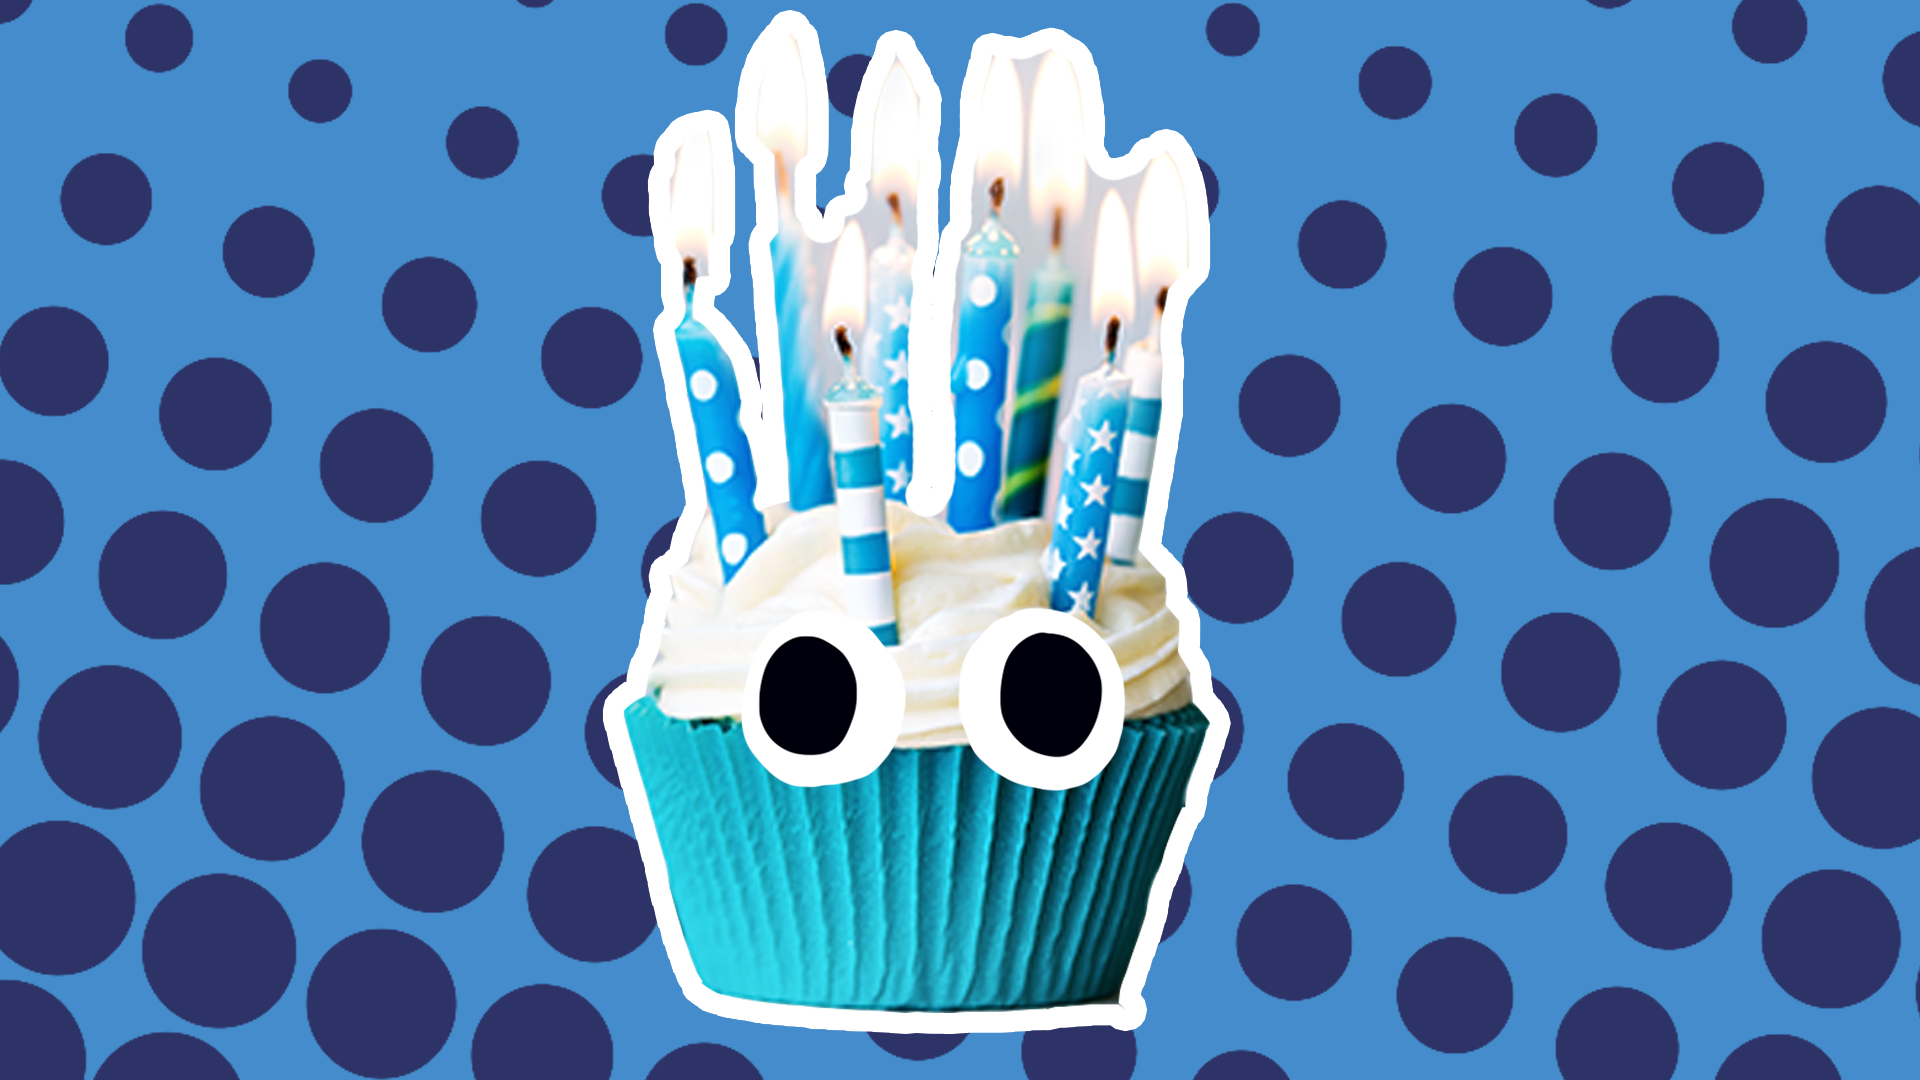 Blue birthday cake on blue background with eyes